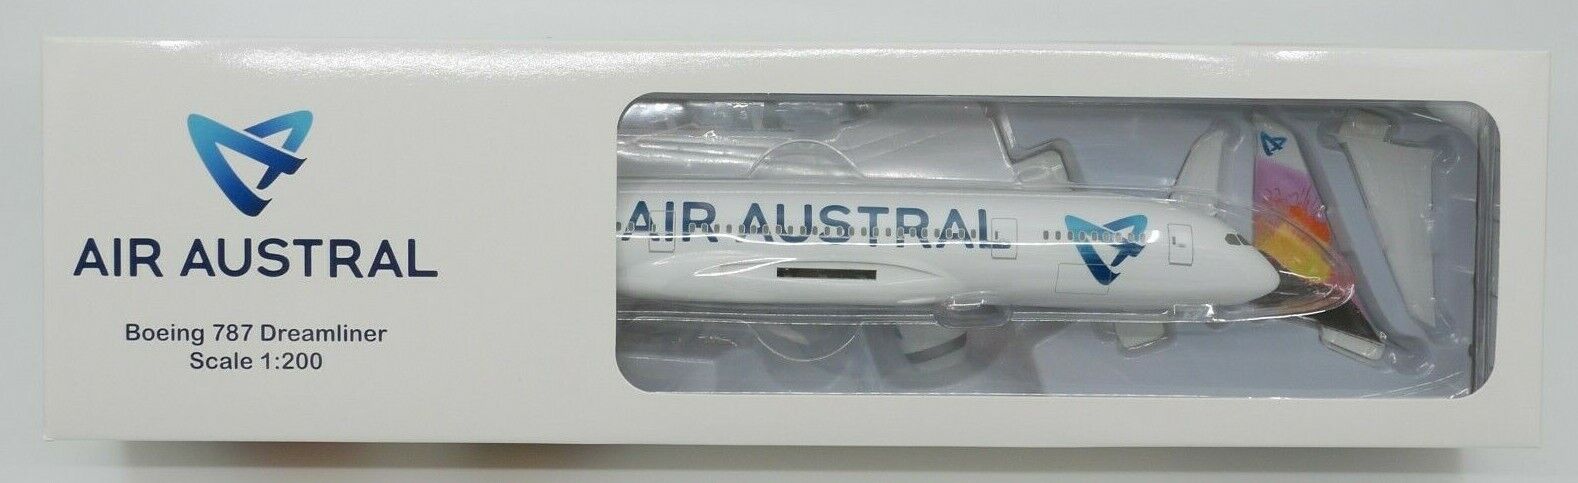 Hogan Wings AA02, Air Austral B787-8, 1:200